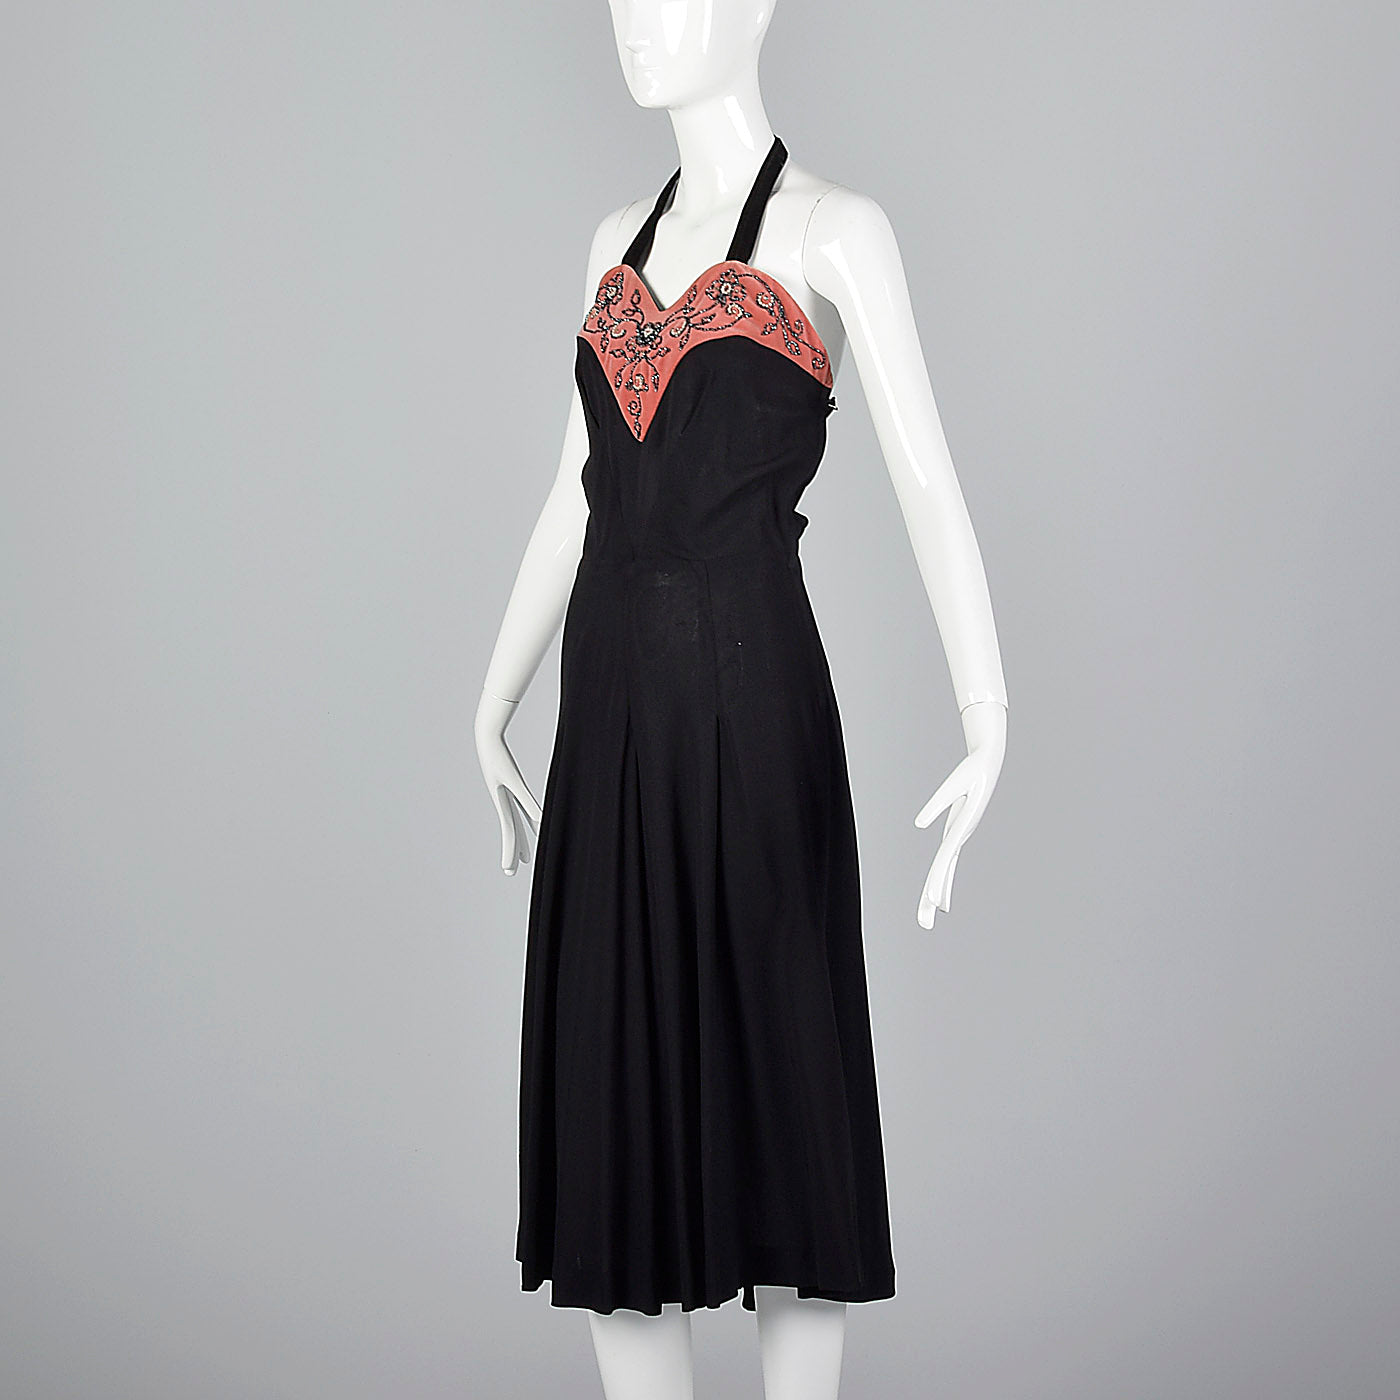 1930s Black Halter Dress with Pink Velvet Neckline